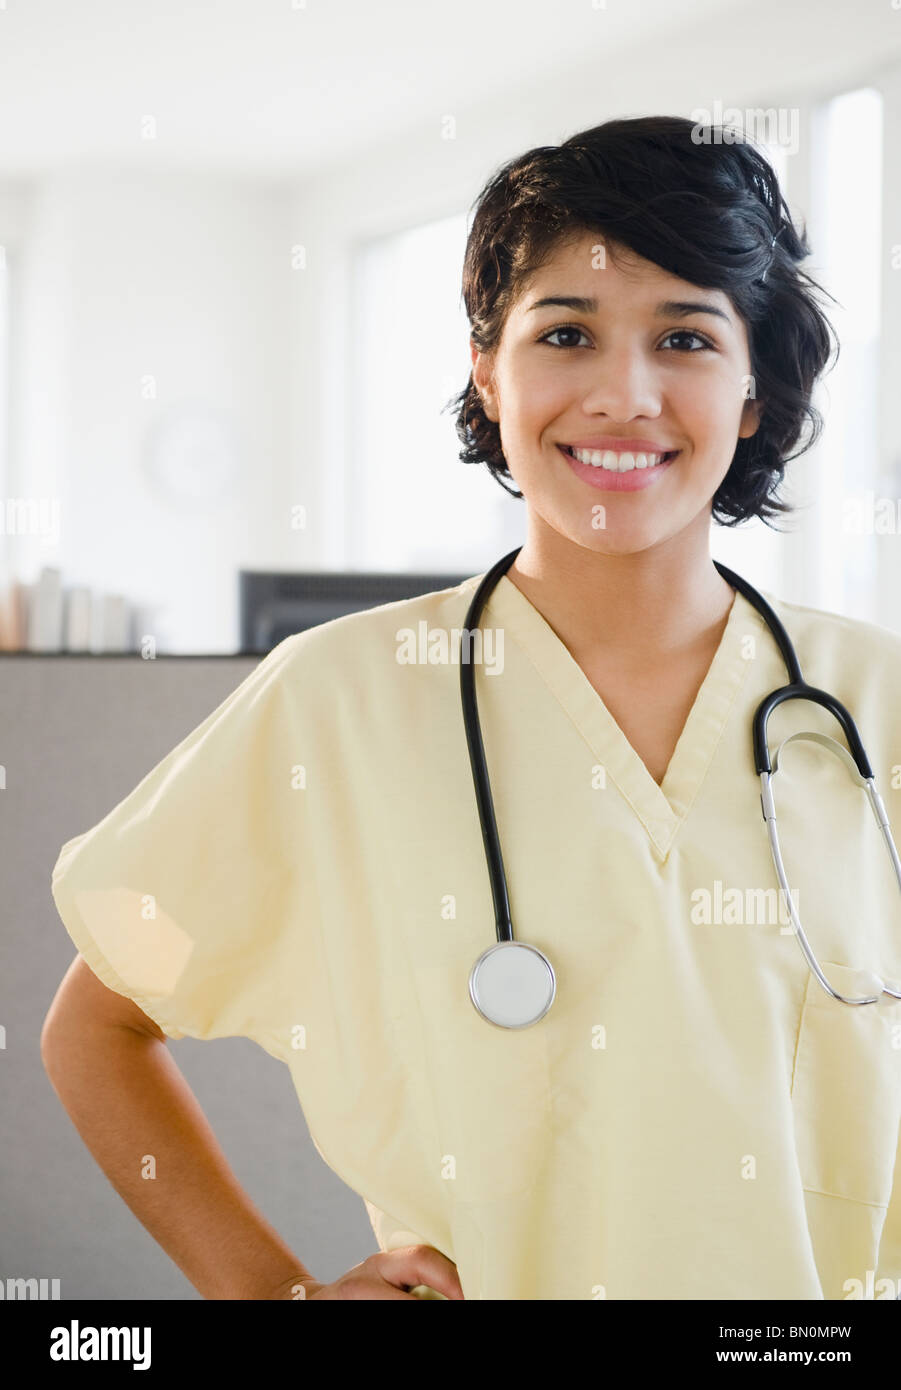 Enfermera hispana en matorrales con estetoscopio Foto de stock